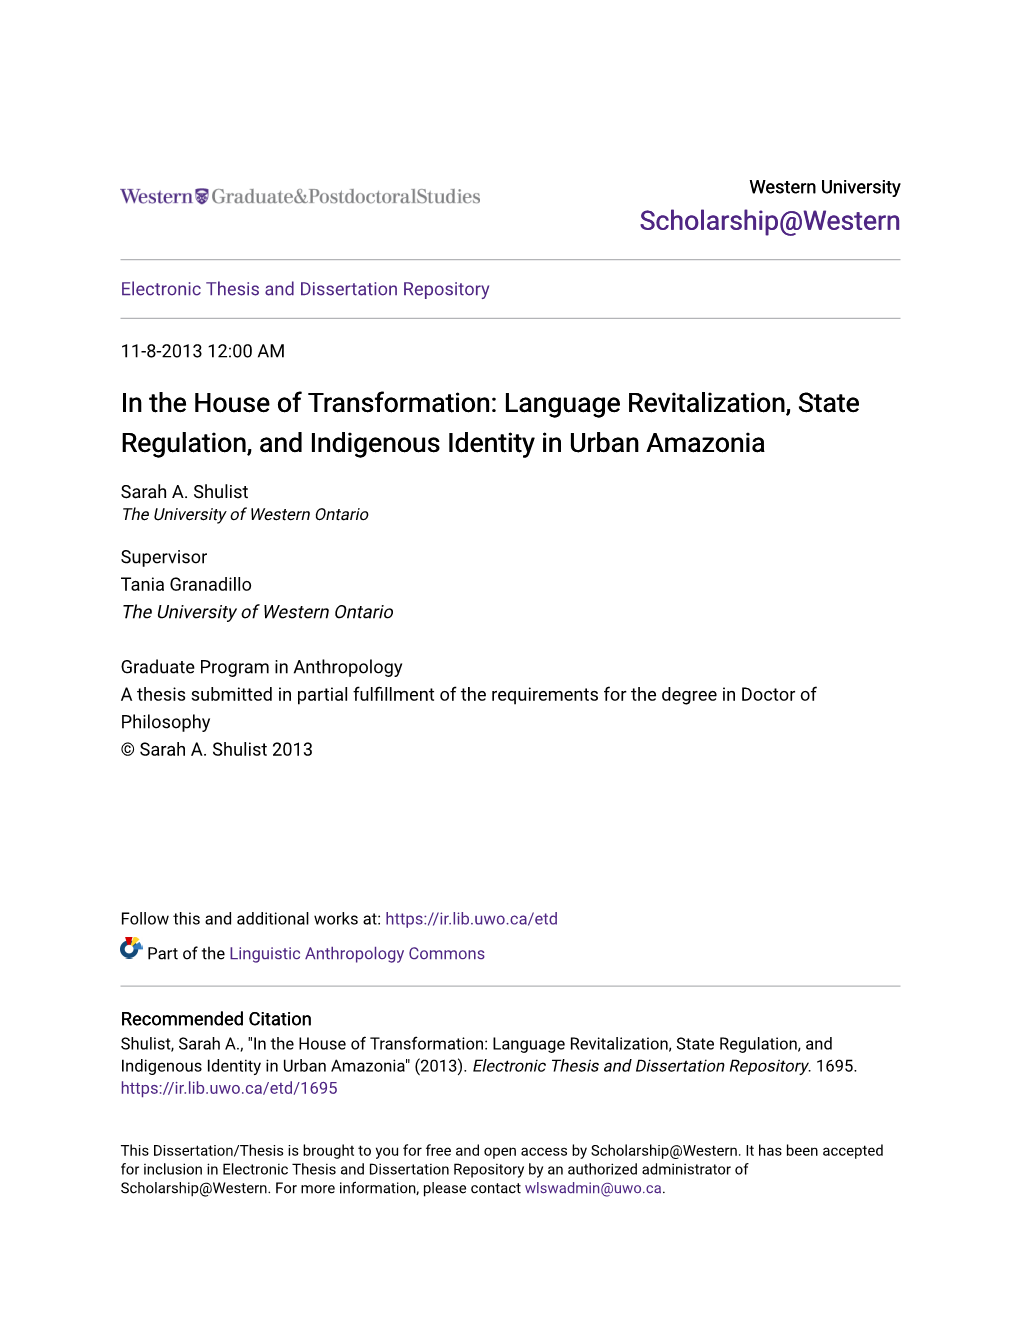 Language Revitalization, State Regulation, and Indigenous Identity in Urban Amazonia